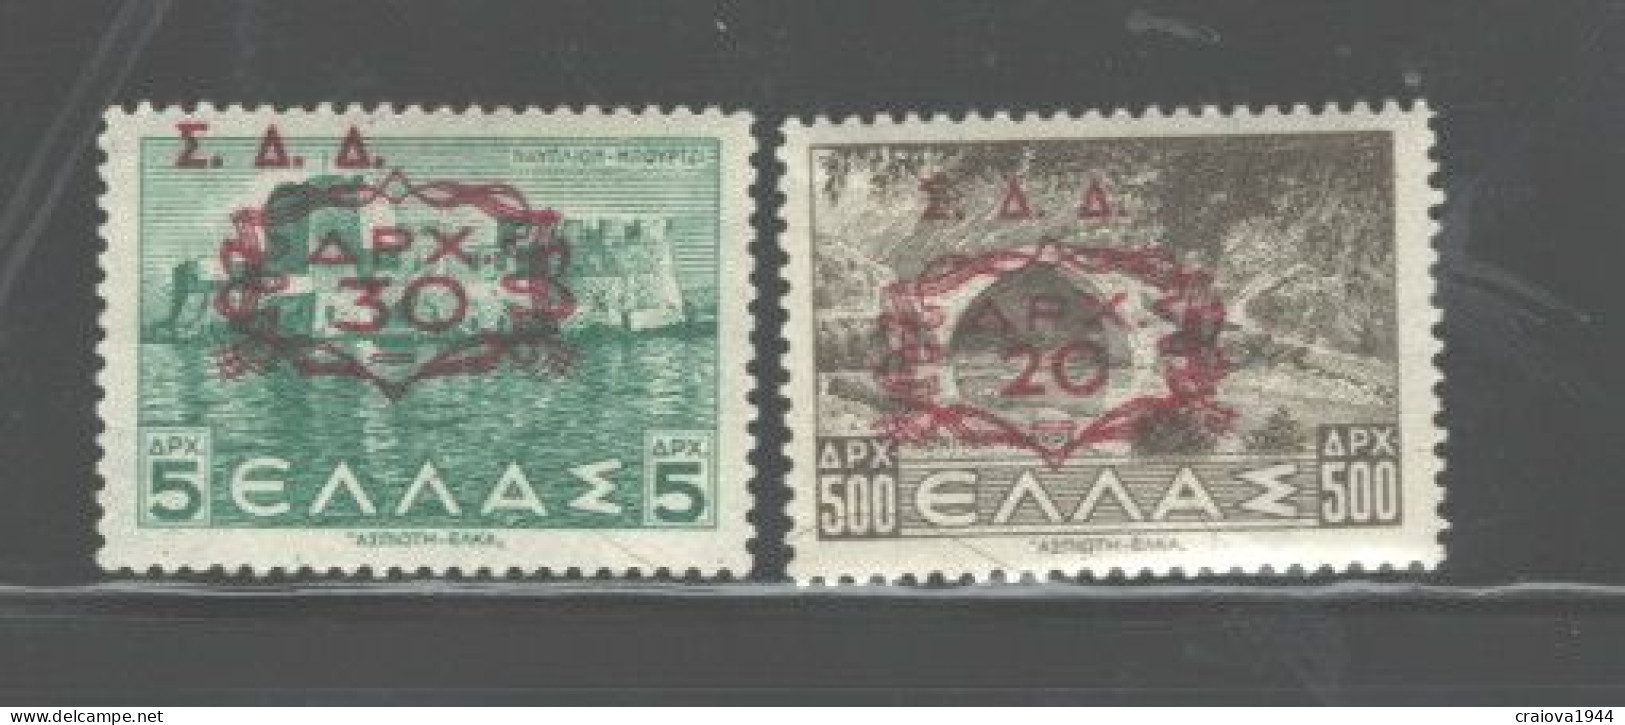 GREECE STAMPS,1947 #N243-N244 OVERPRINT, USED IN DODECANESE ISL. - Dodekanesos